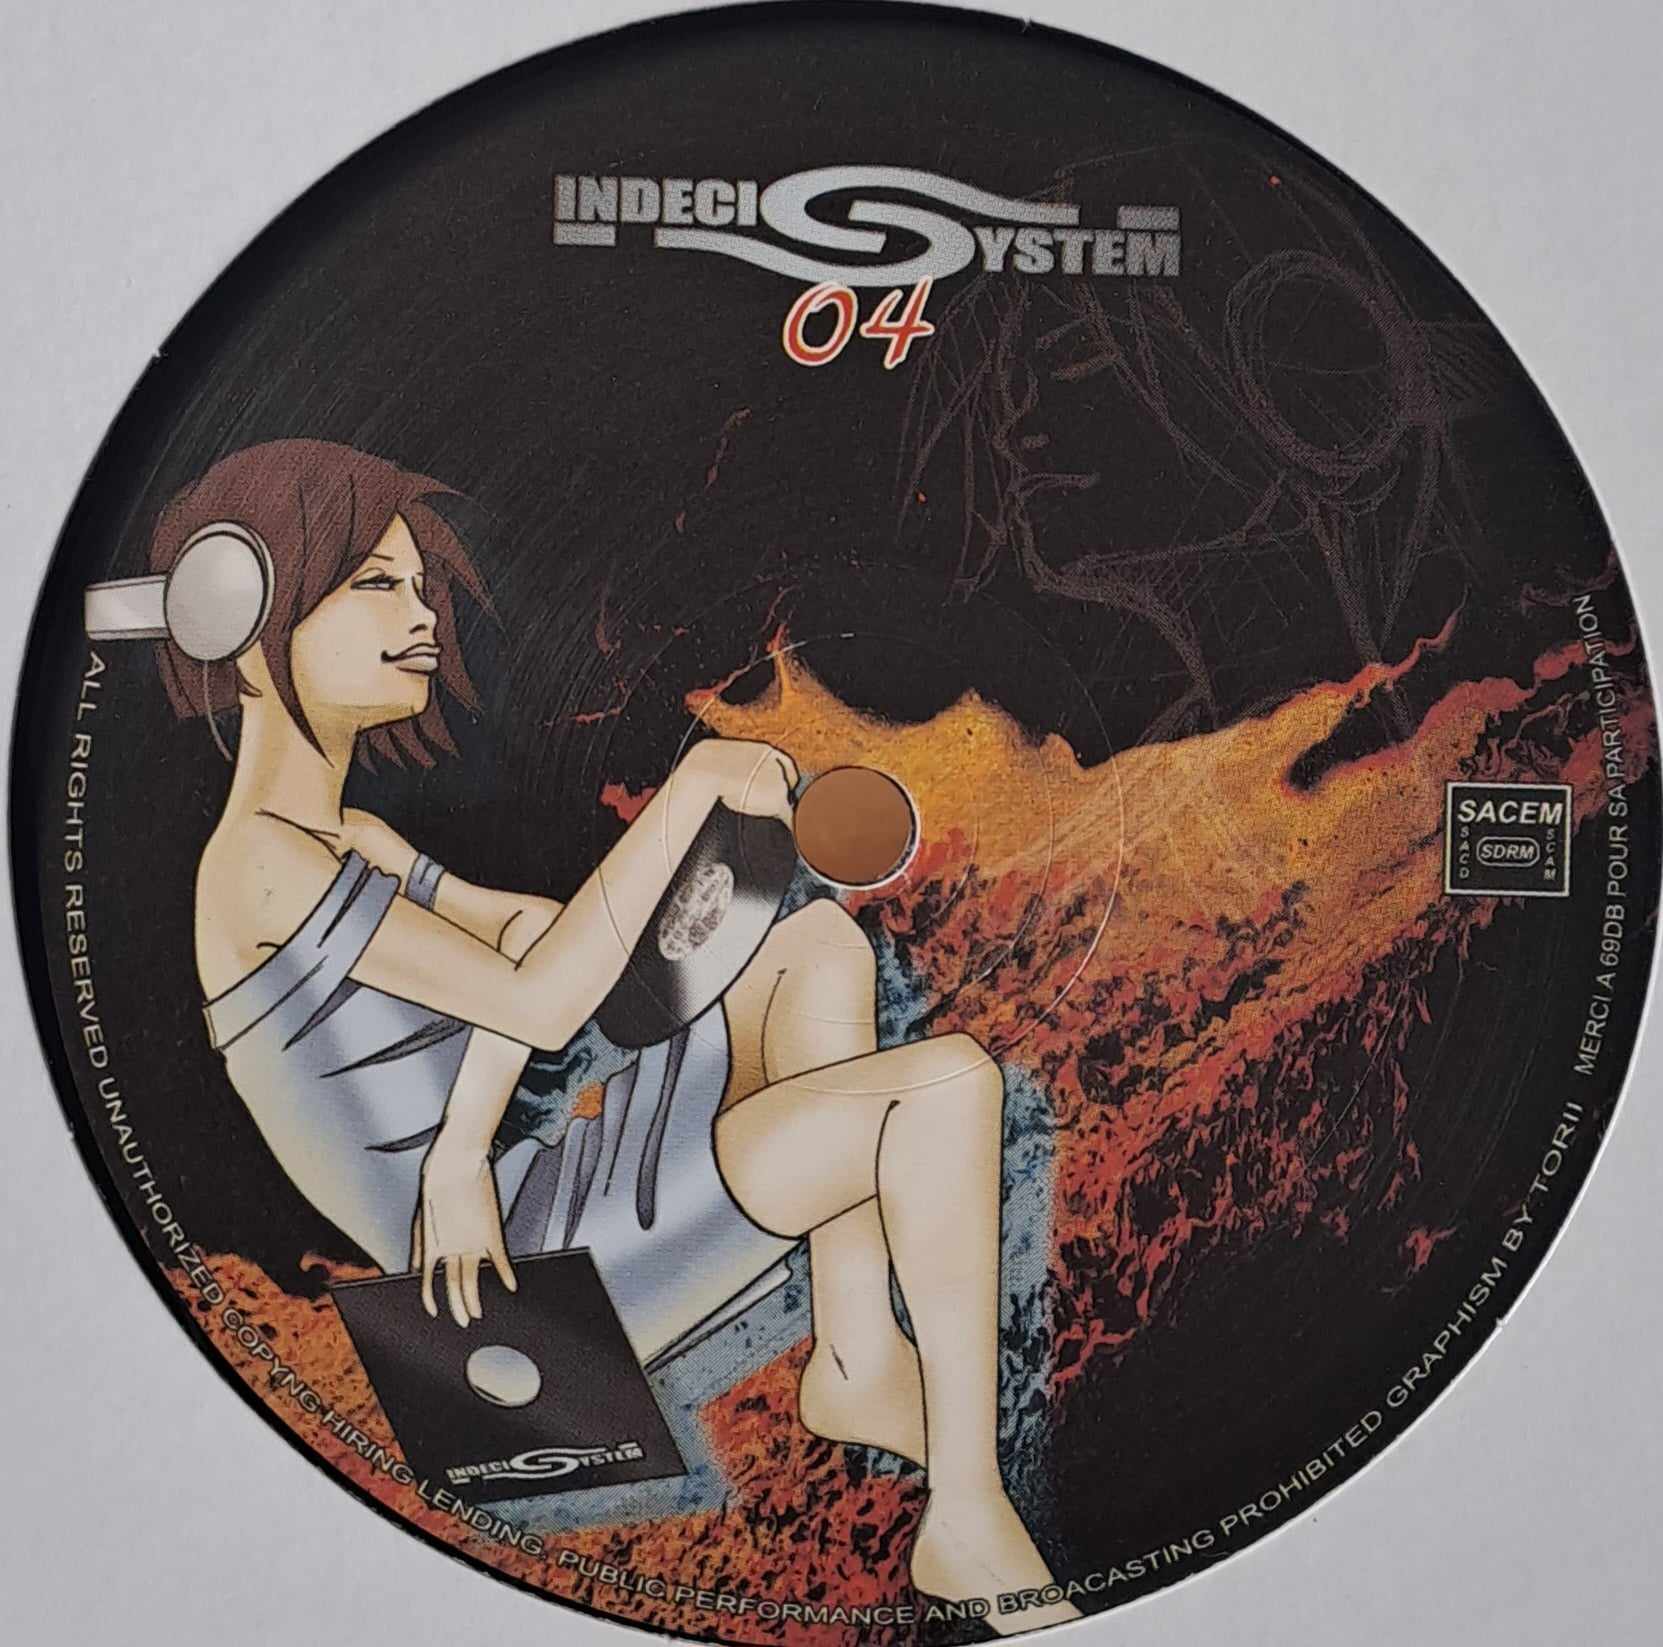 Indecis System 04 - vinyle freetekno